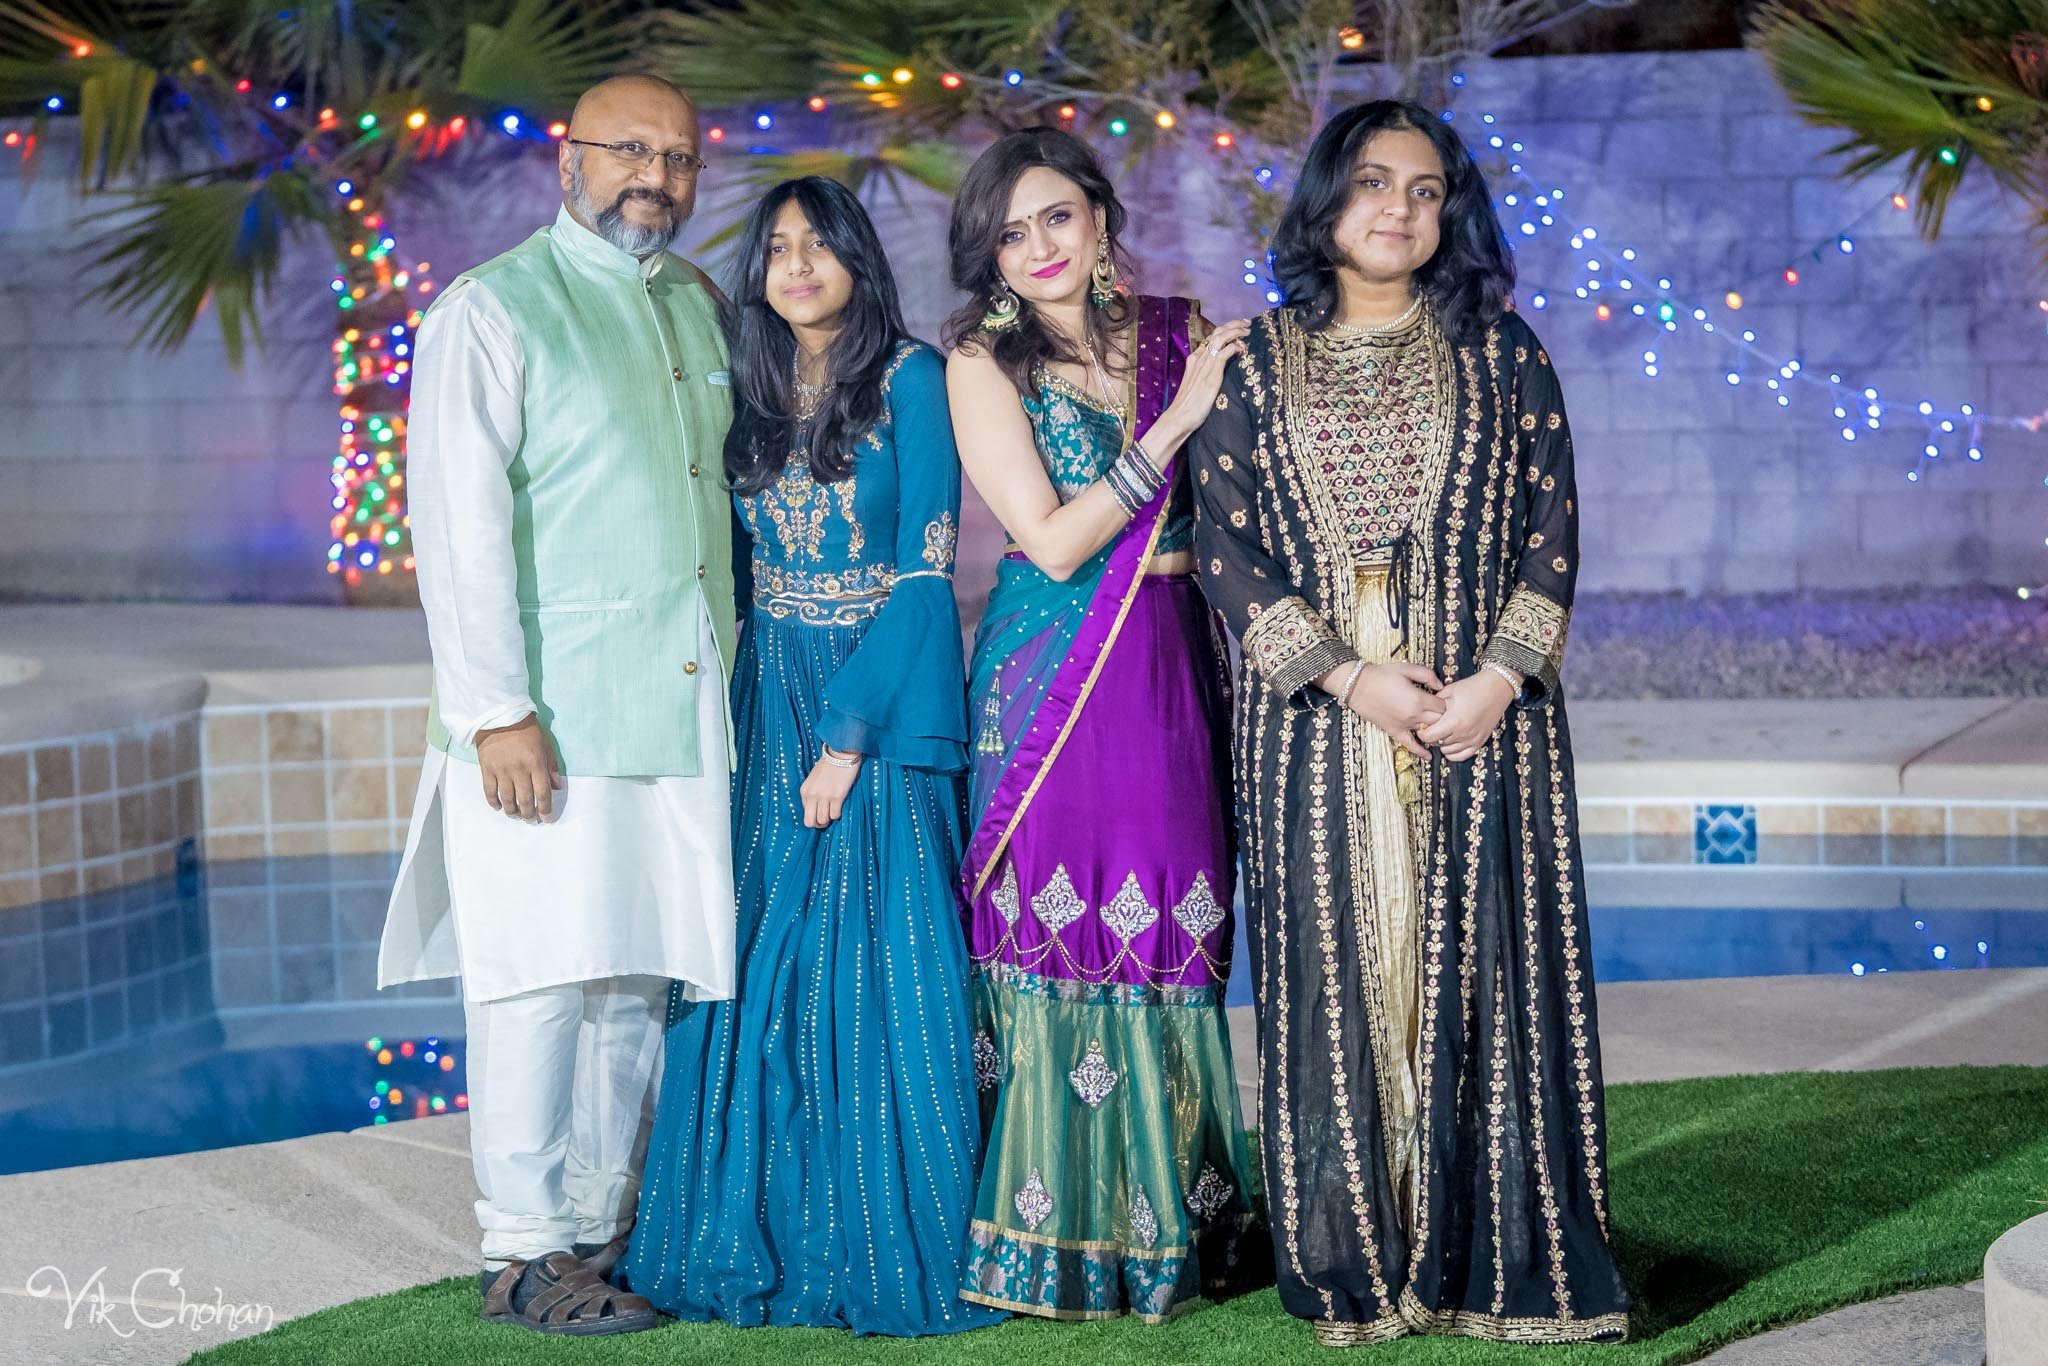 2022-02-04-Hely-&-Parth-Garba-Night-Indian-Wedding-Vik-Chohan-Photography-Photo-Booth-Social-Media-VCP-187.jpg